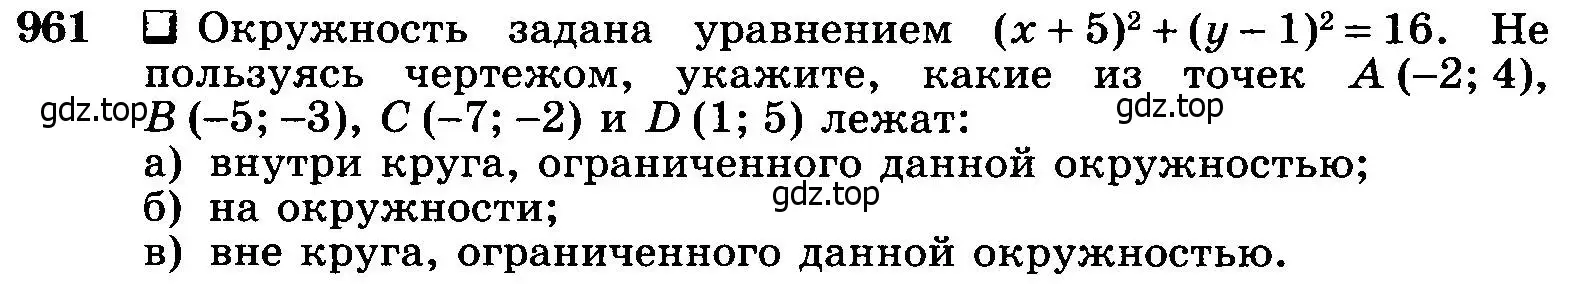 Условие номер 961 (страница 240) гдз по геометрии 7-9 класс Атанасян, Бутузов, учебник